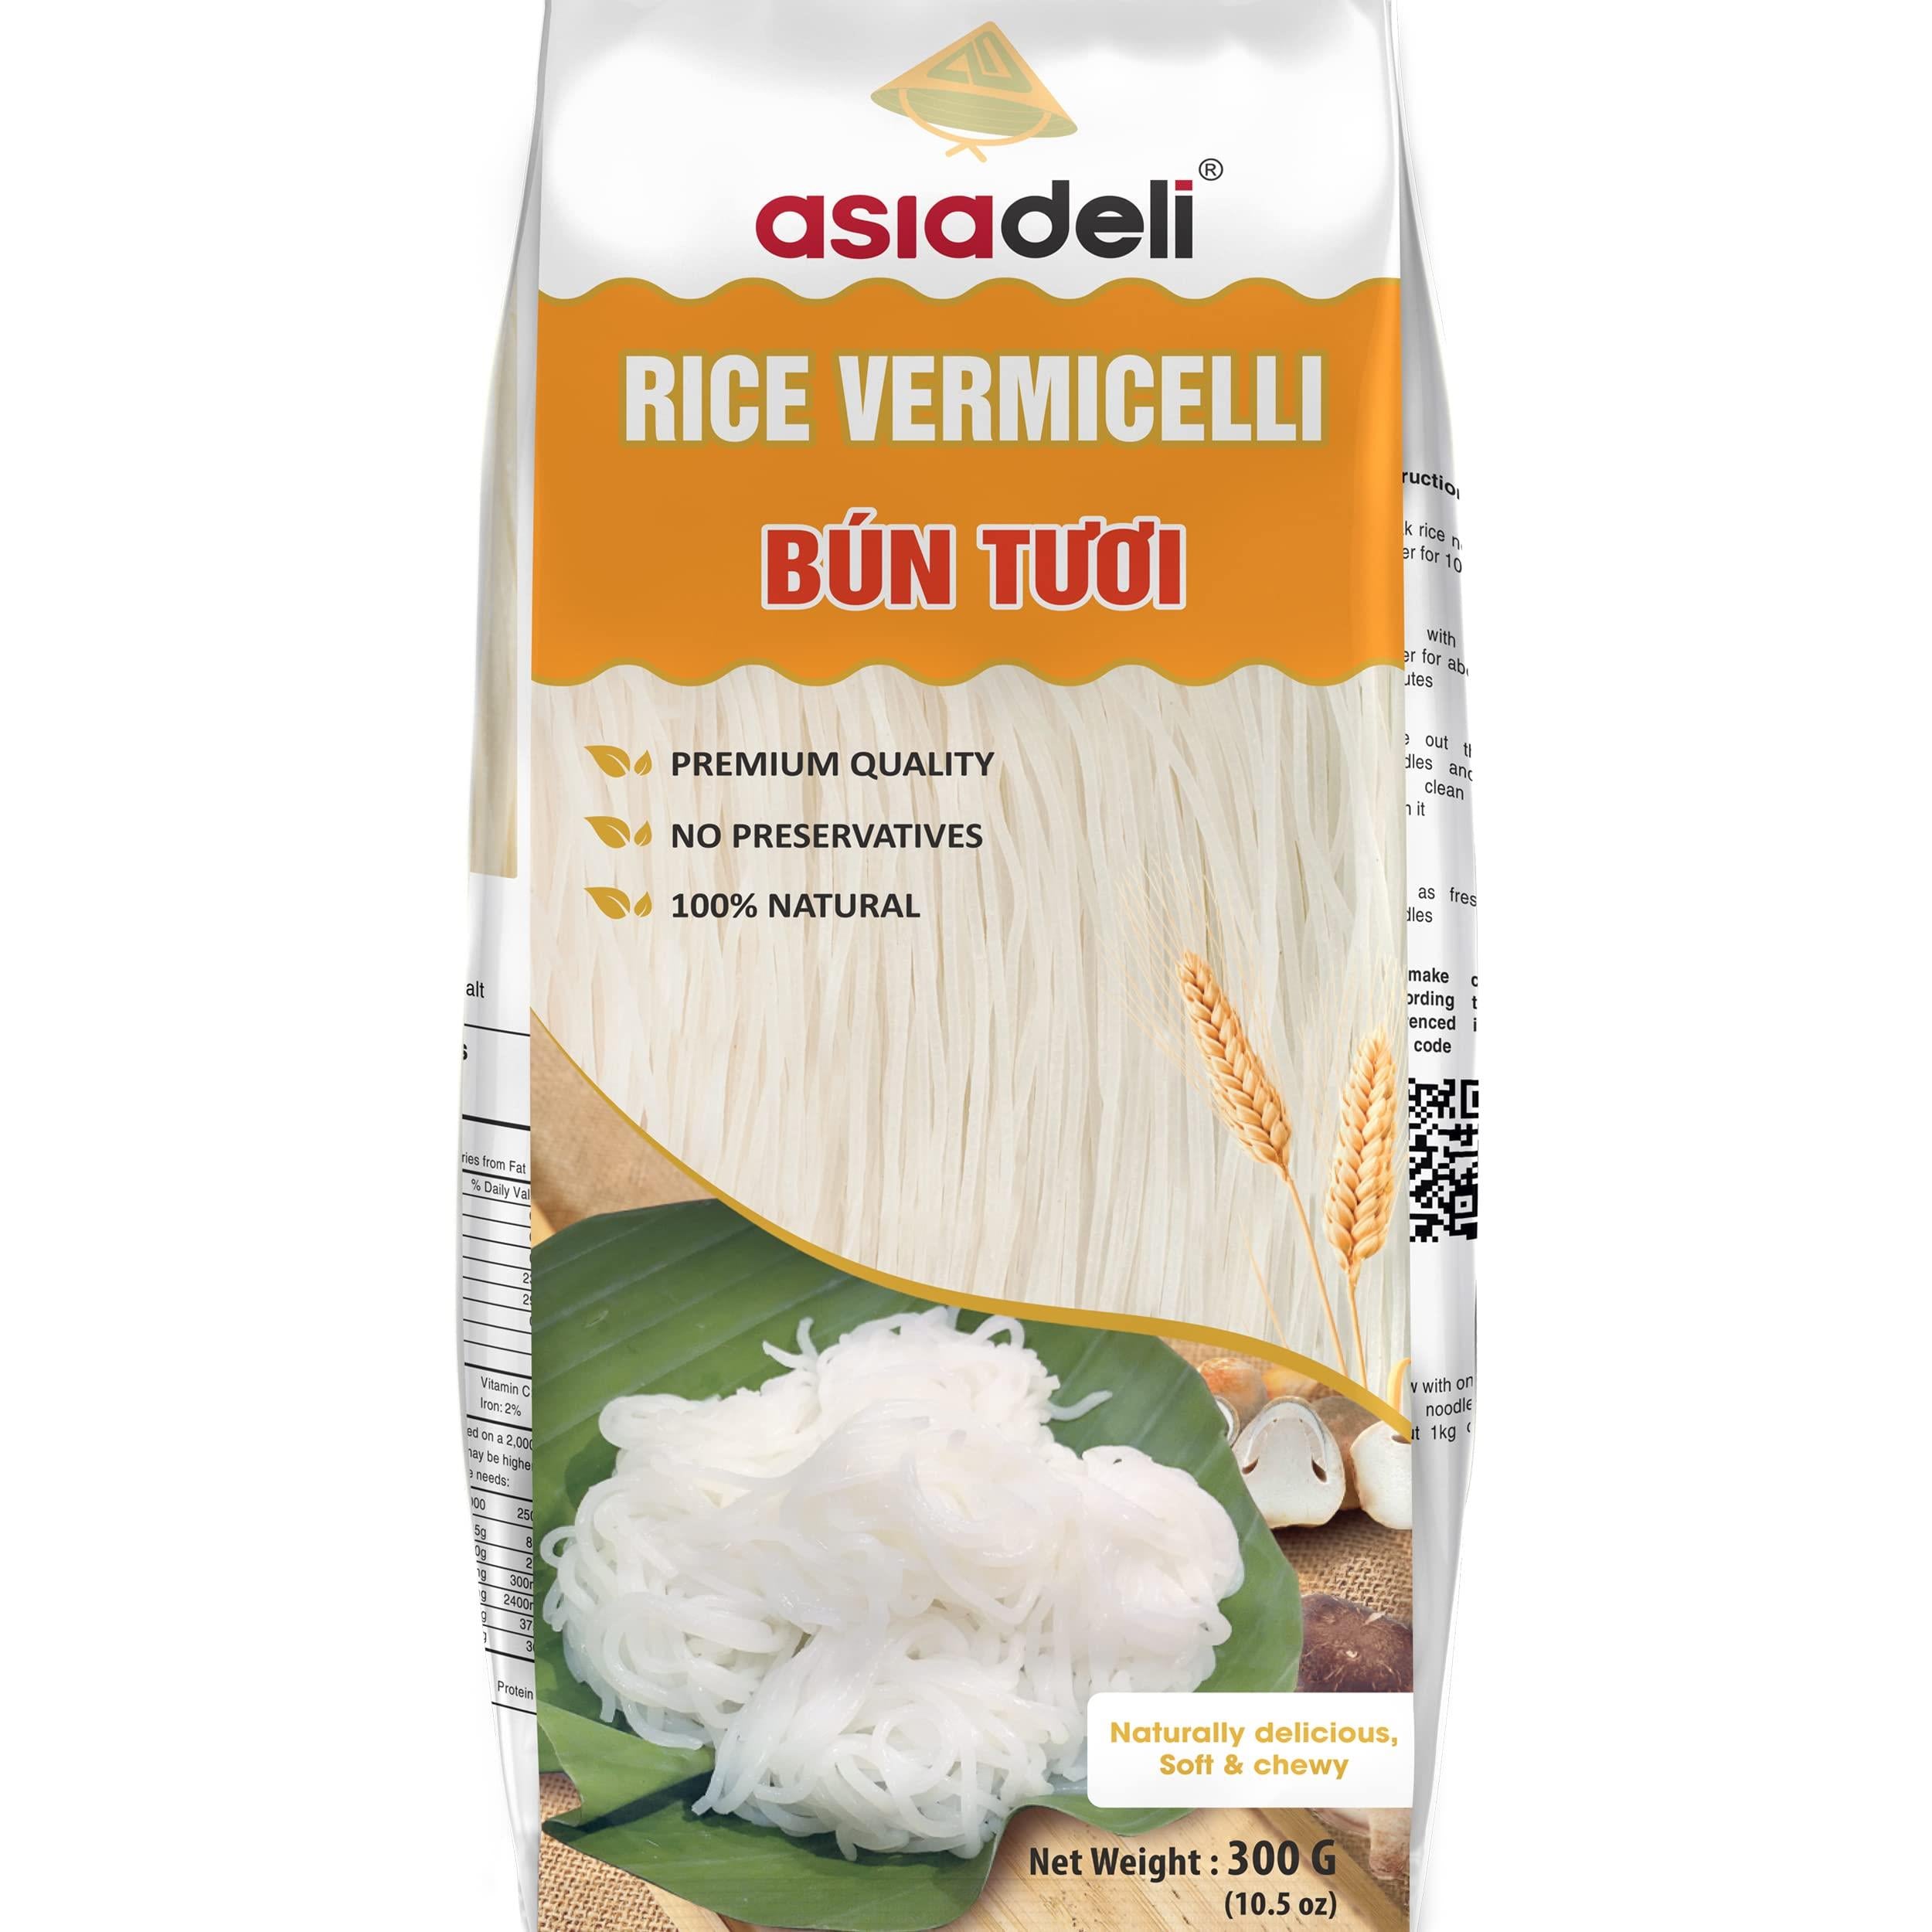 Asiadeli Rice Vermicelli, Premium Rice Noodles, Vietnamese Bun Tuoi for Asian Food - 10.5 oz. (Pack of 1 Bag)